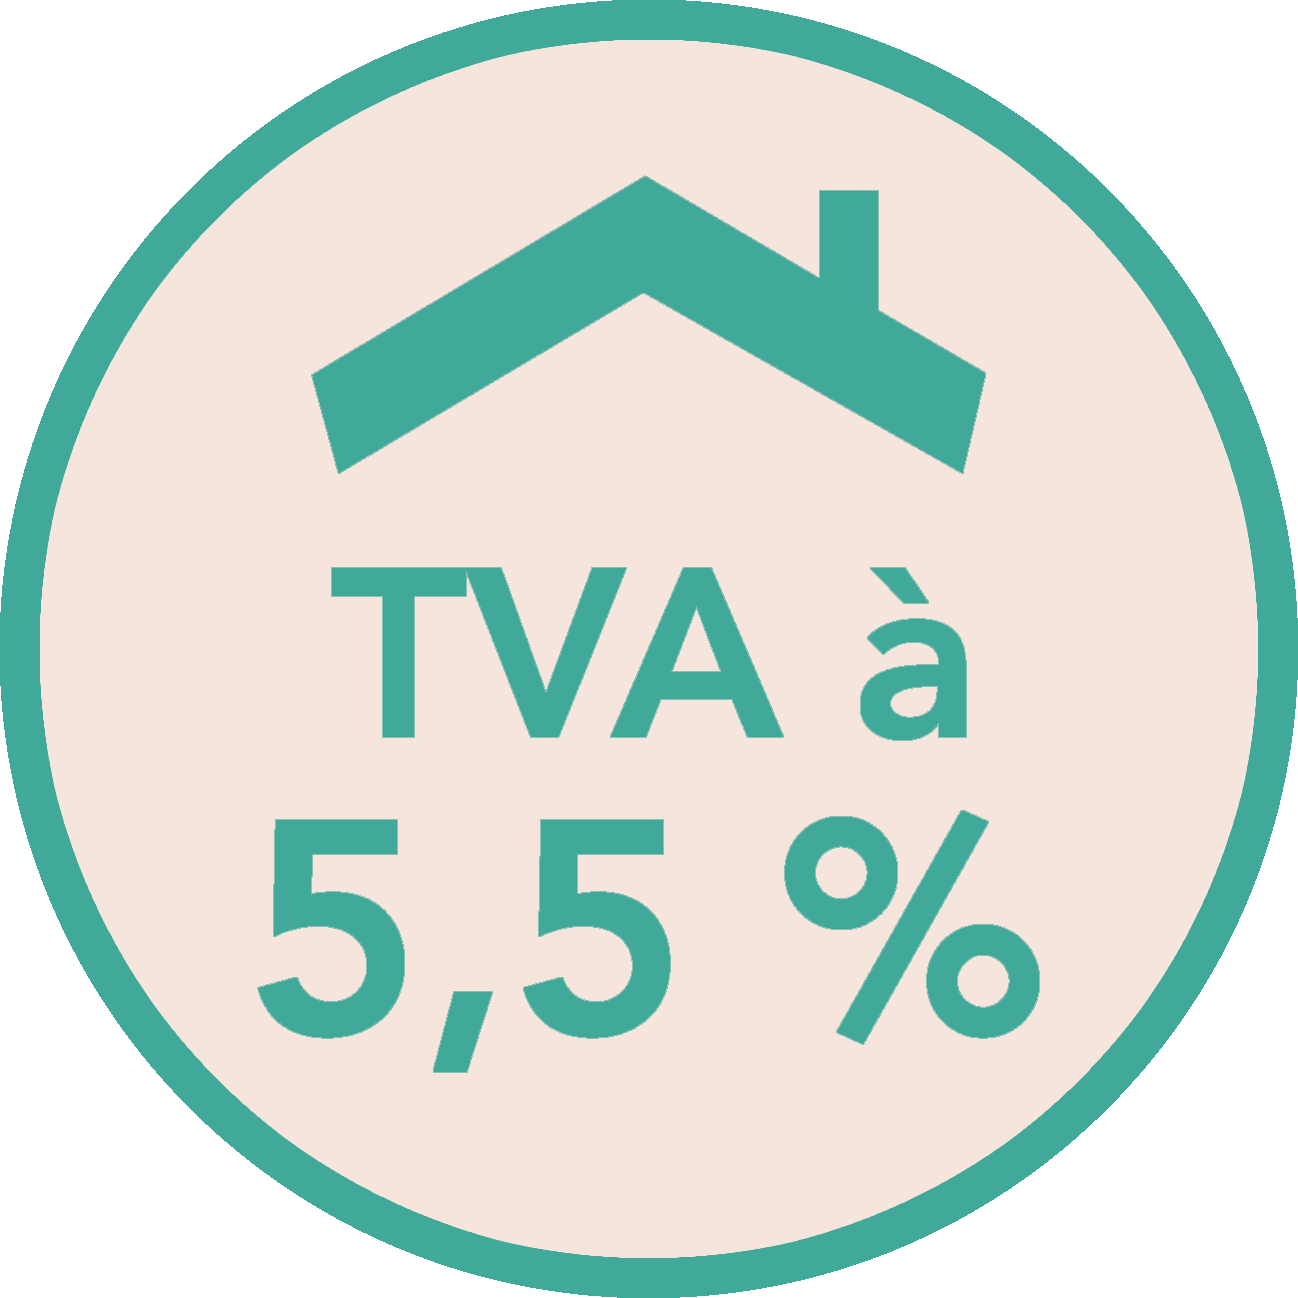 TVA 5.5%